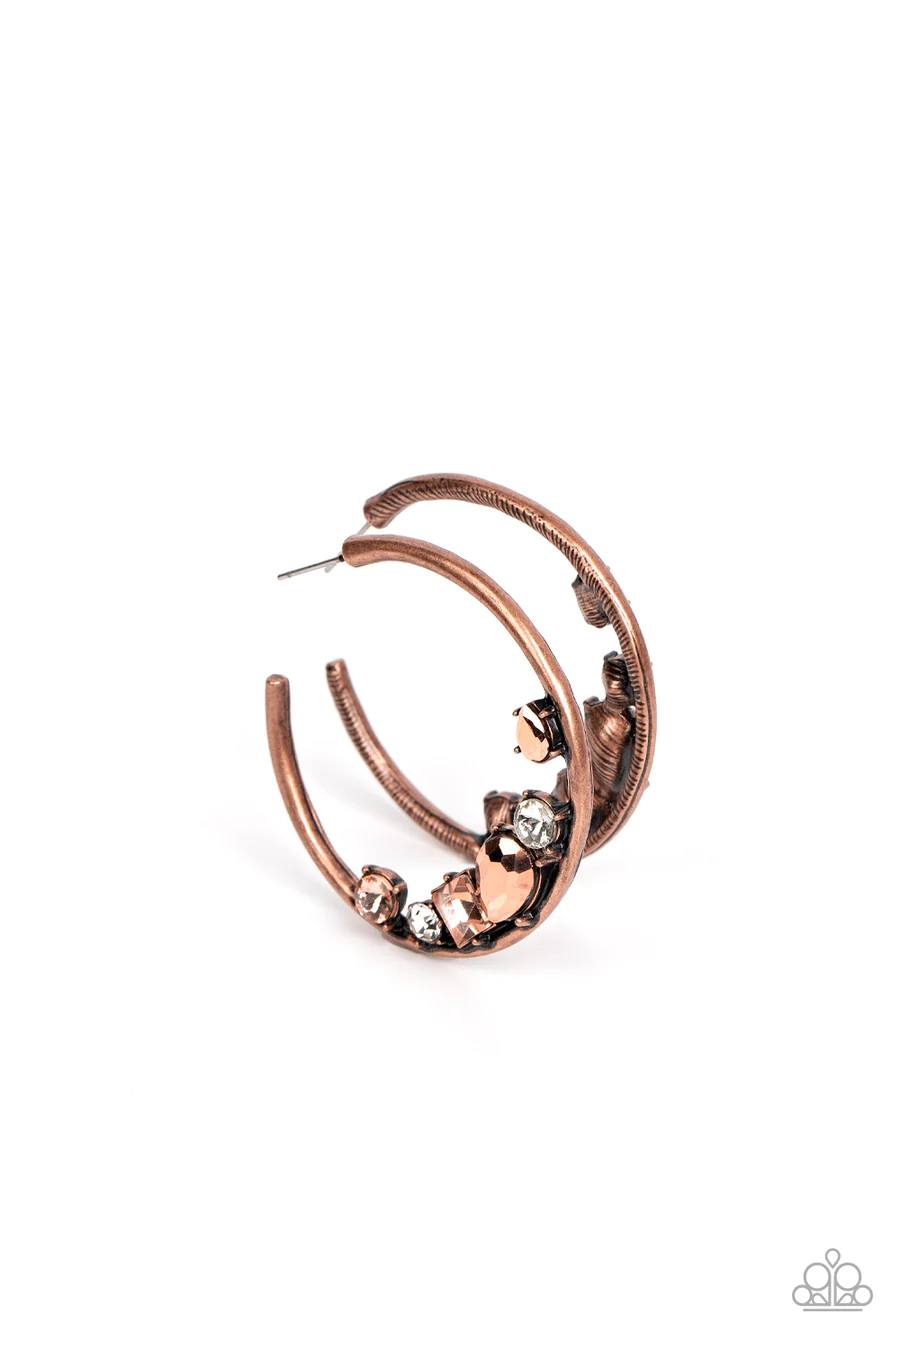 Attractive Allure - Copper Aurum and Smoky Gem Hoop Post Earrings